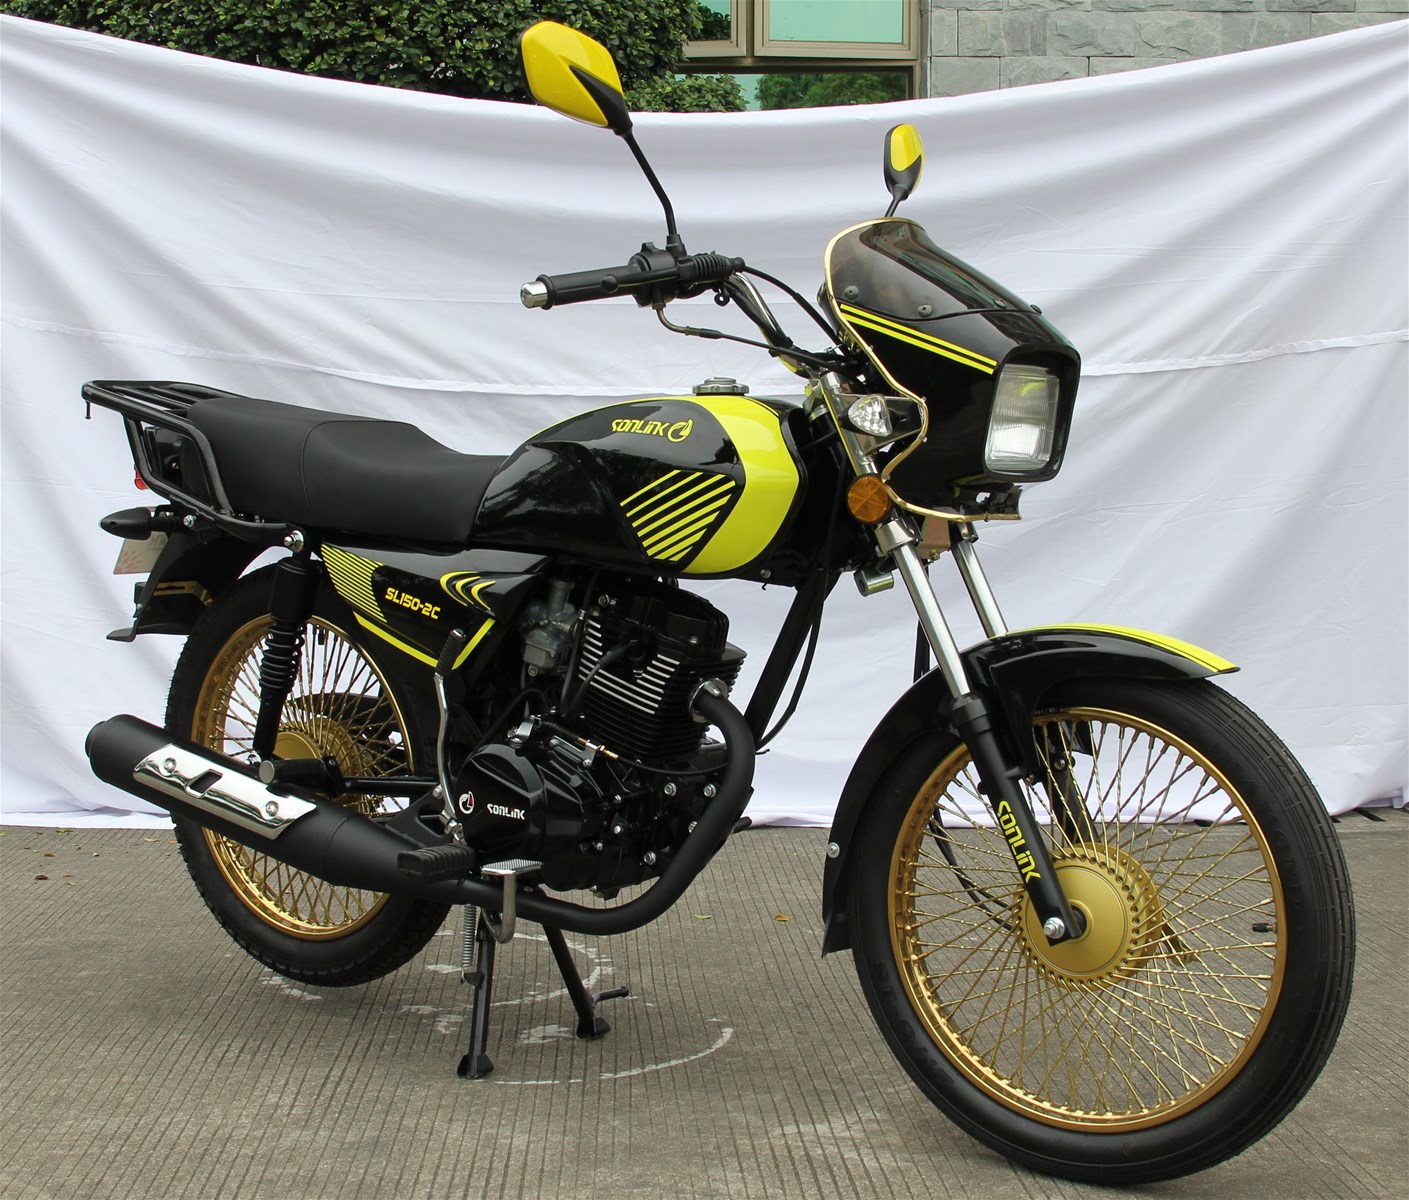 CG125/150 off Road Motorcycle